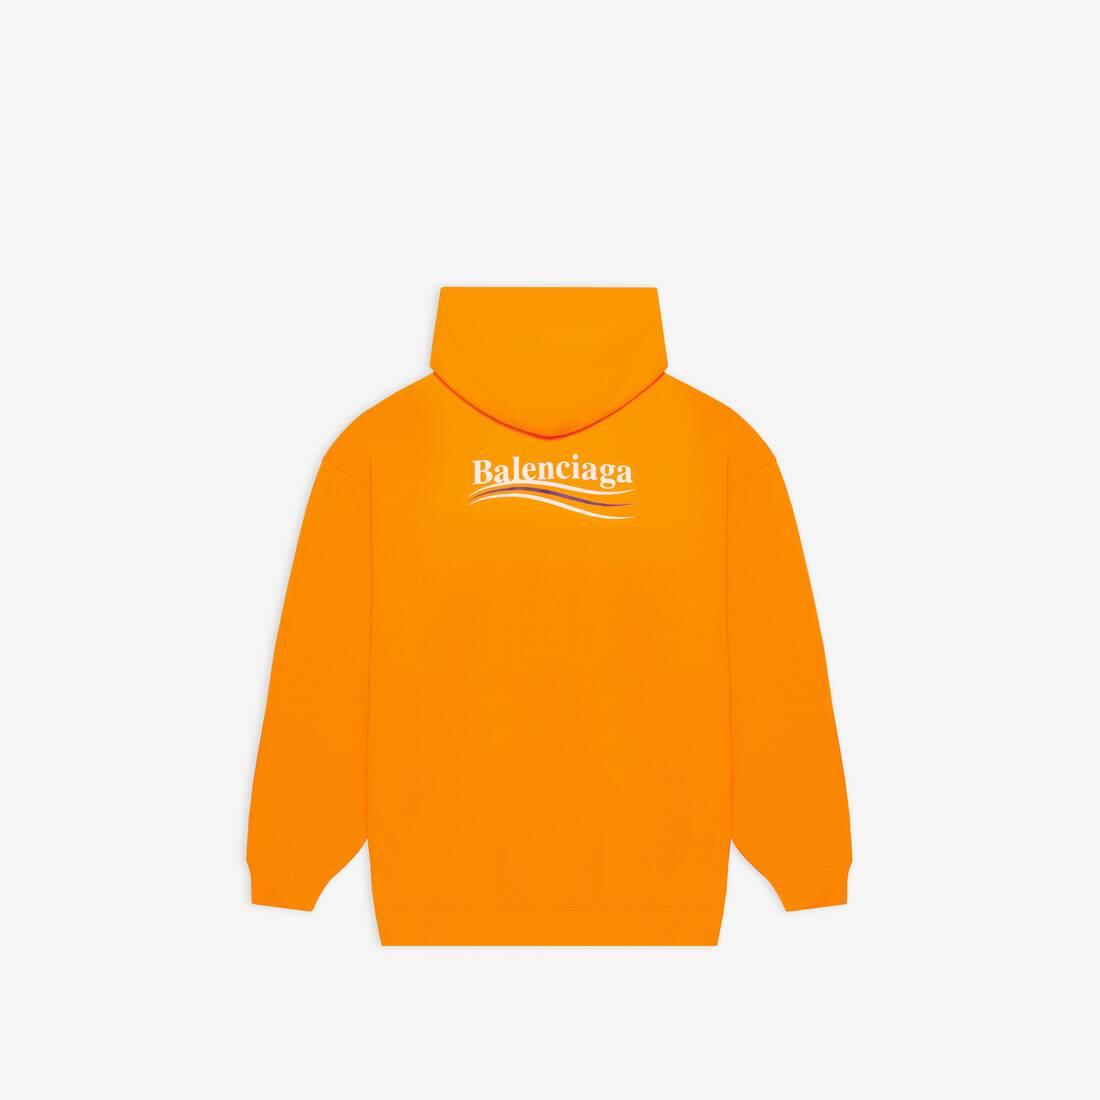 Balenciaga Fleece Political Campaign Medium Fit Hoodie in Orange 